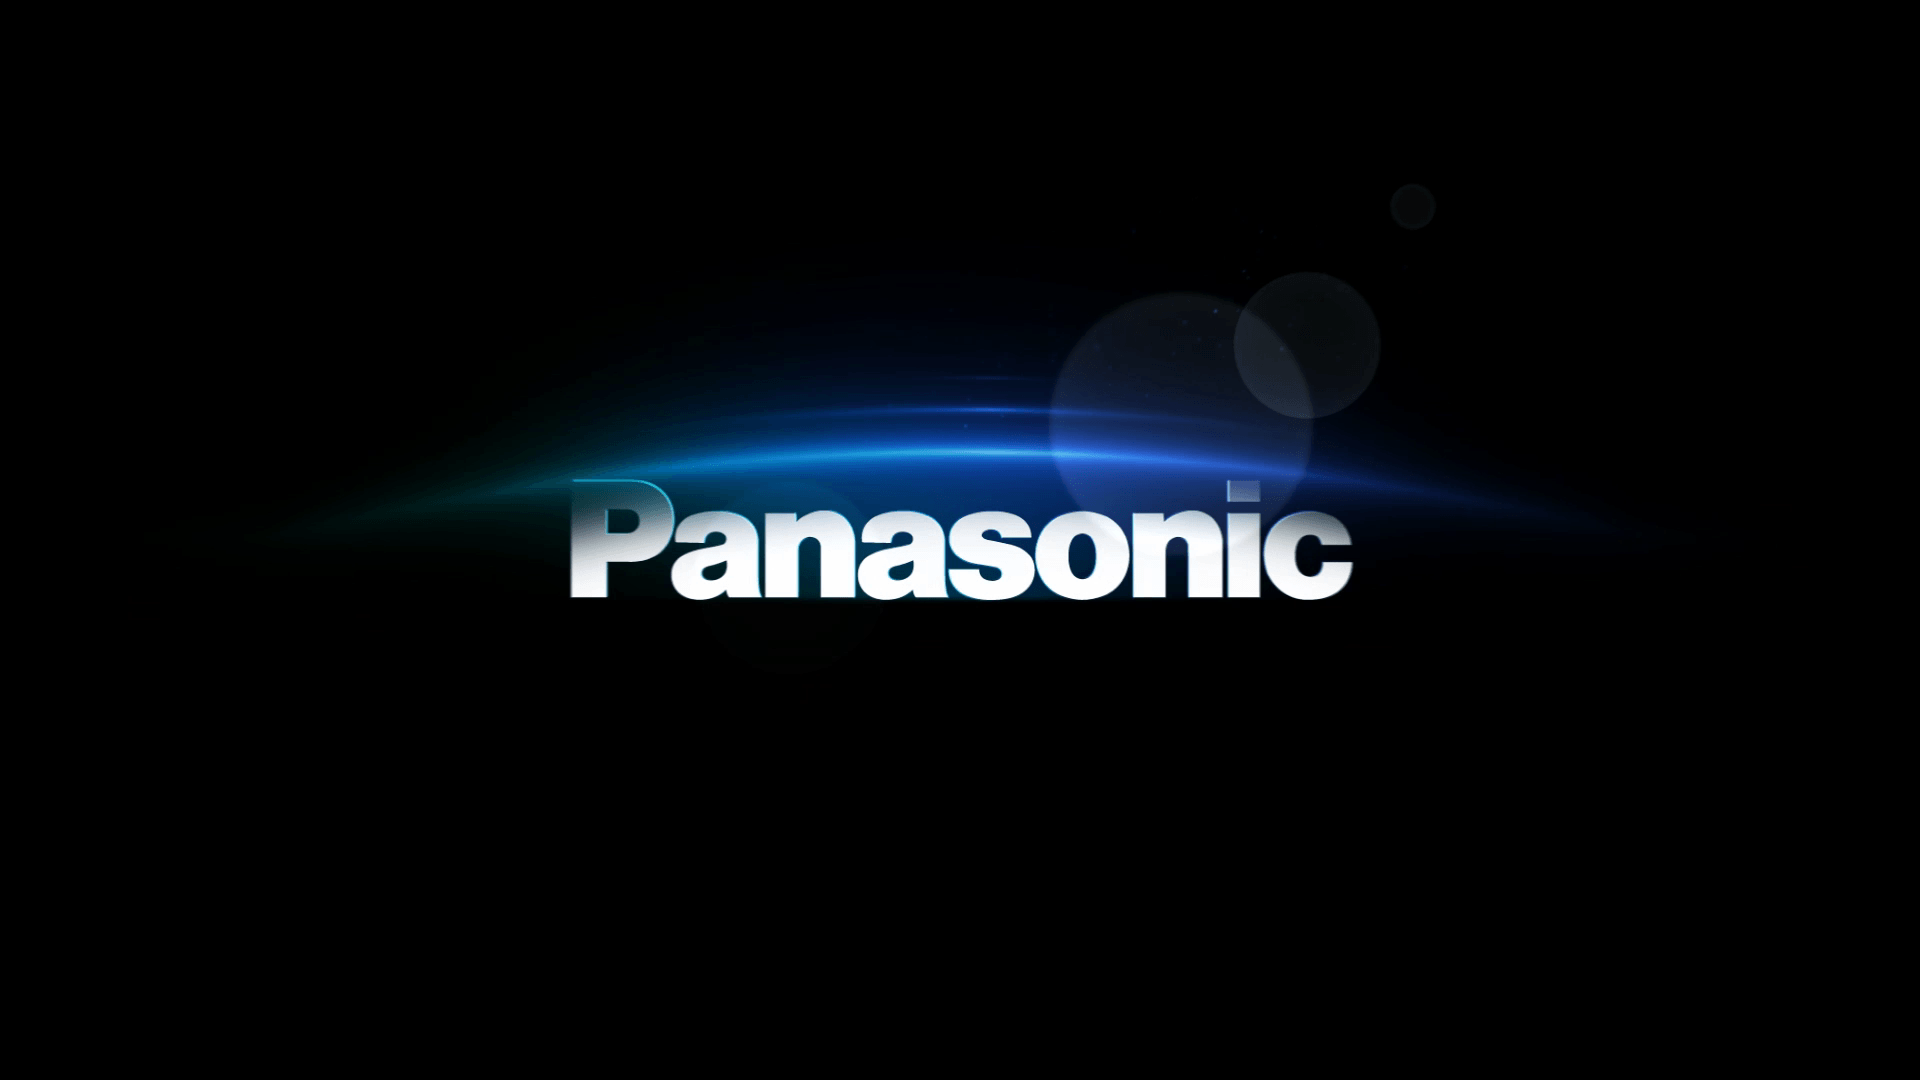 Panasonic Wallpapers - Top Free Panasonic Backgrounds - WallpaperAccess